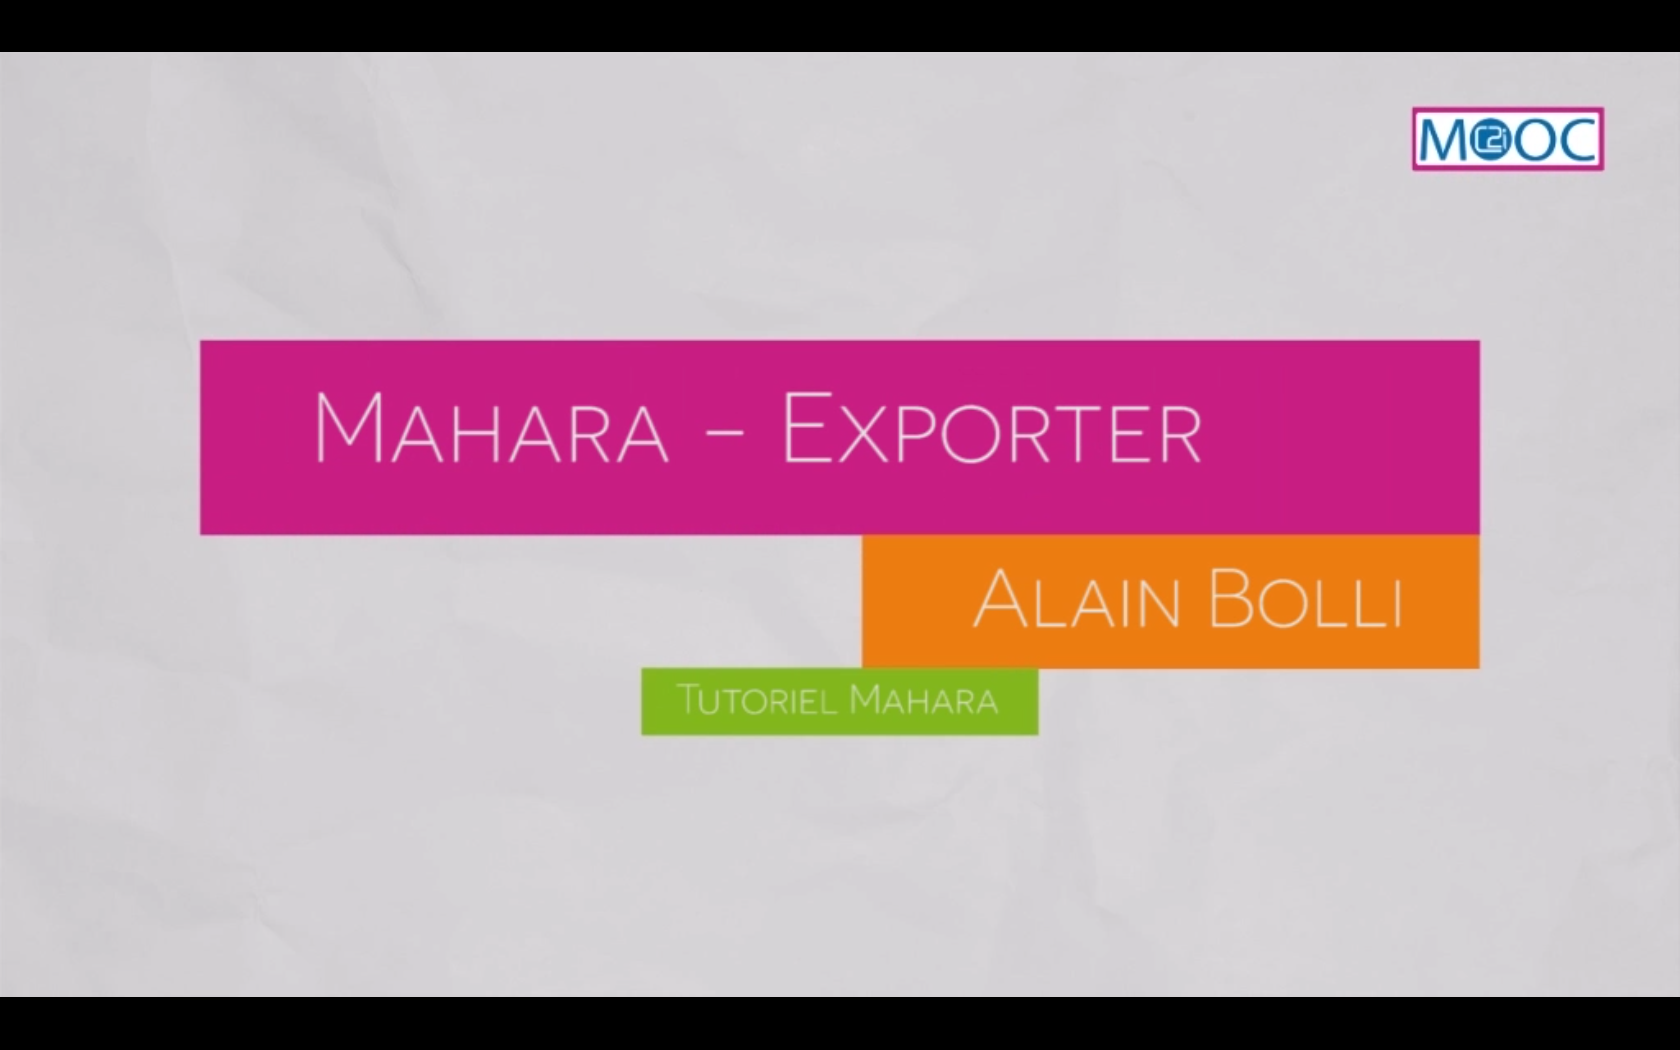 Mahara - exporter